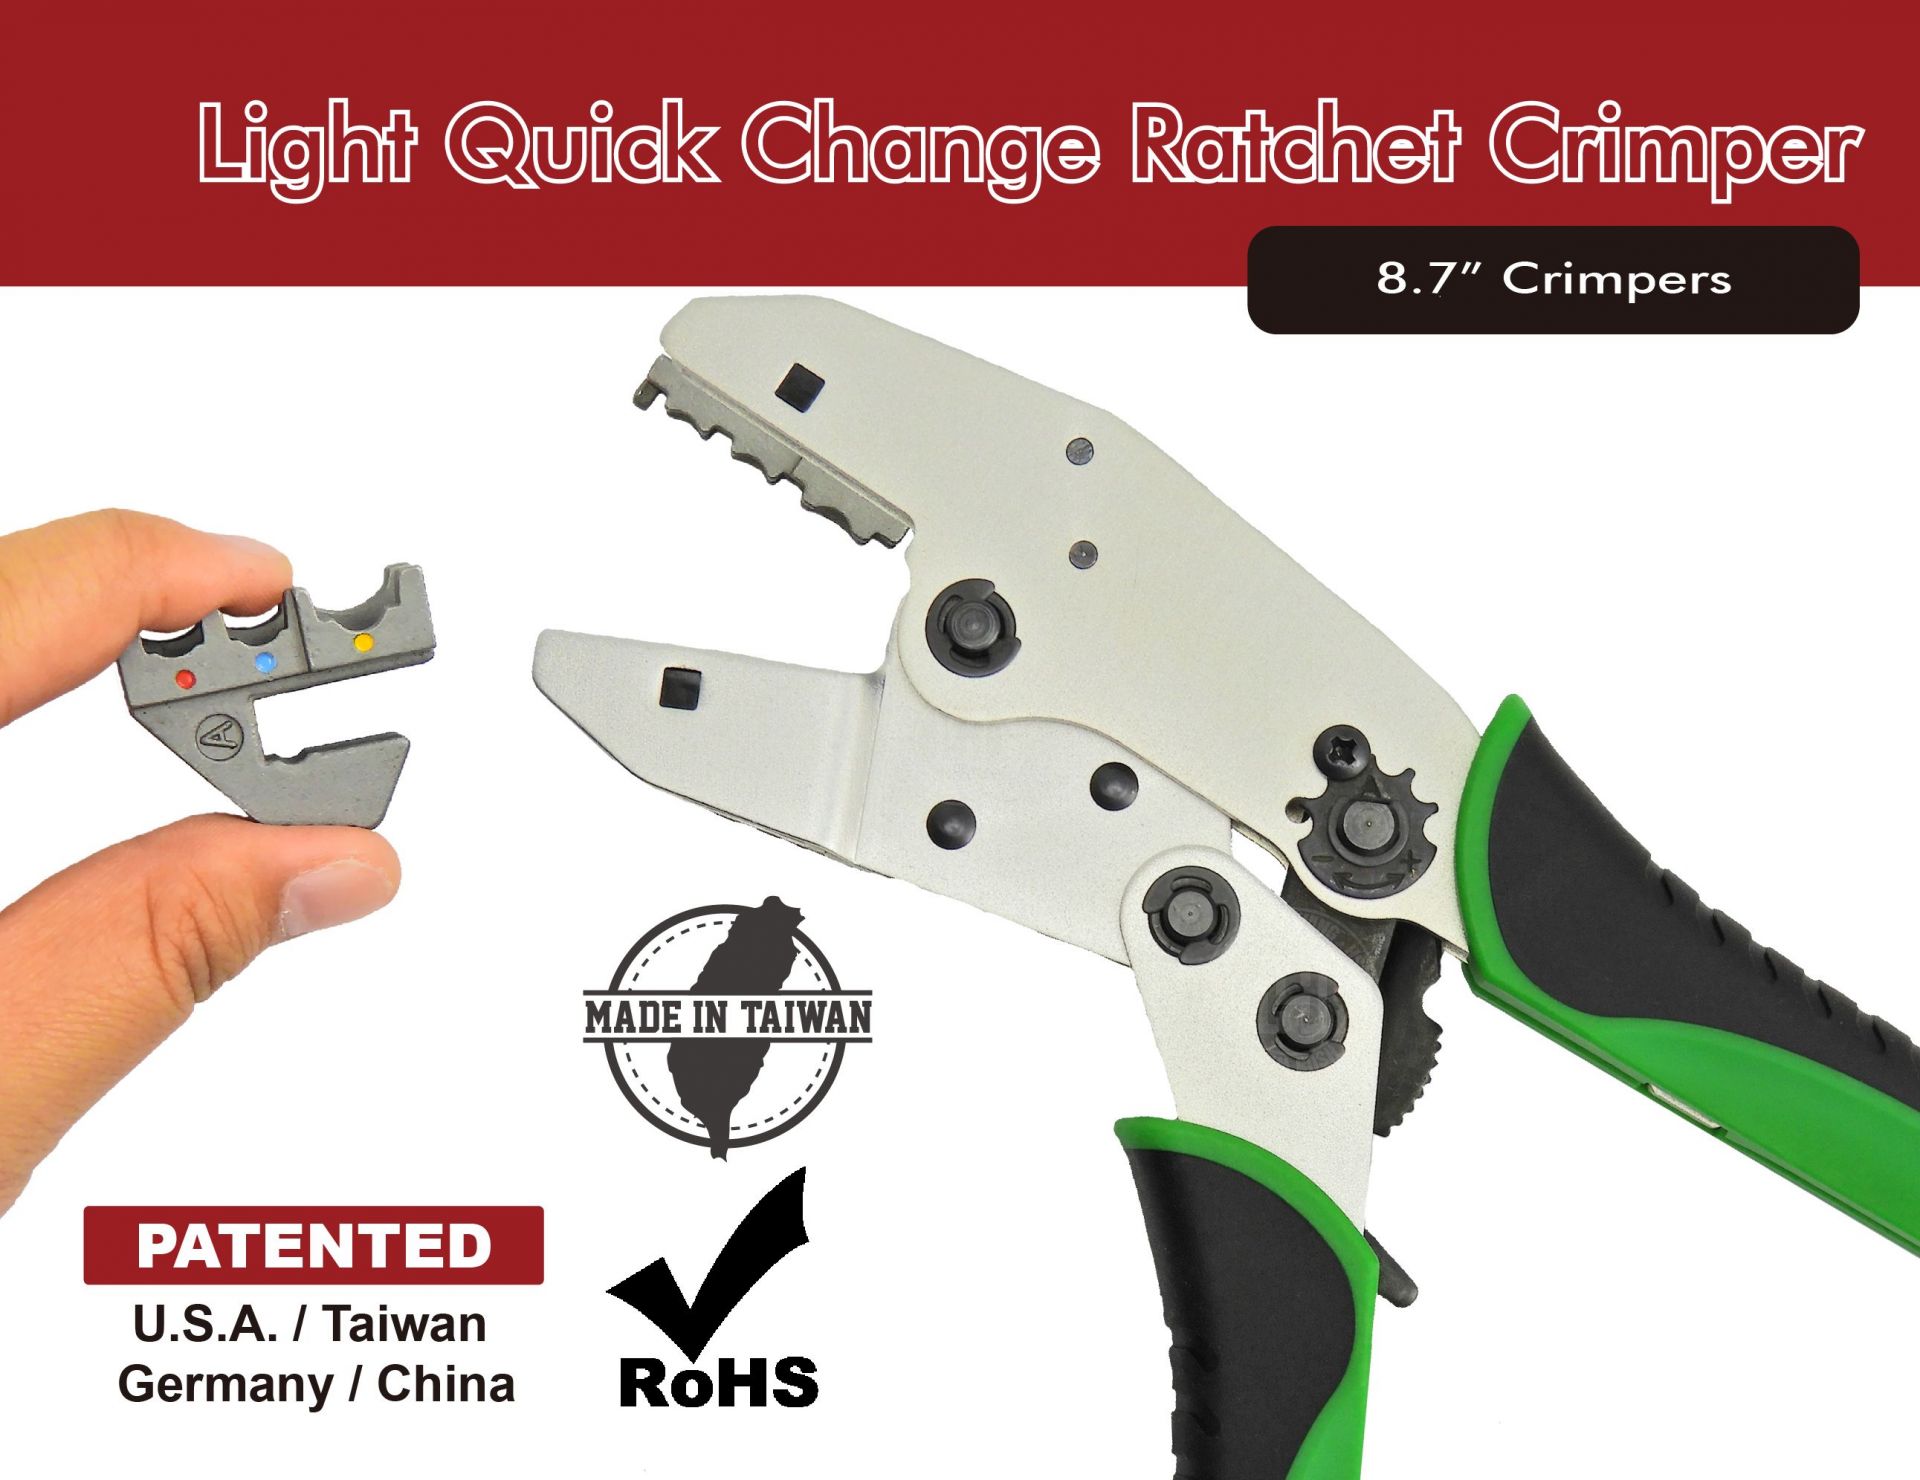 Aluminum Quick Change Ratchet Crimper taiwan jci-JCI Series-Jaw-crimp-crimping-crimp tool-crimping tool-crimp wire-ferrule crimp-ratchet crimp-Taiwan Manufacturer-hsunwang-licrim-hsunwang.com